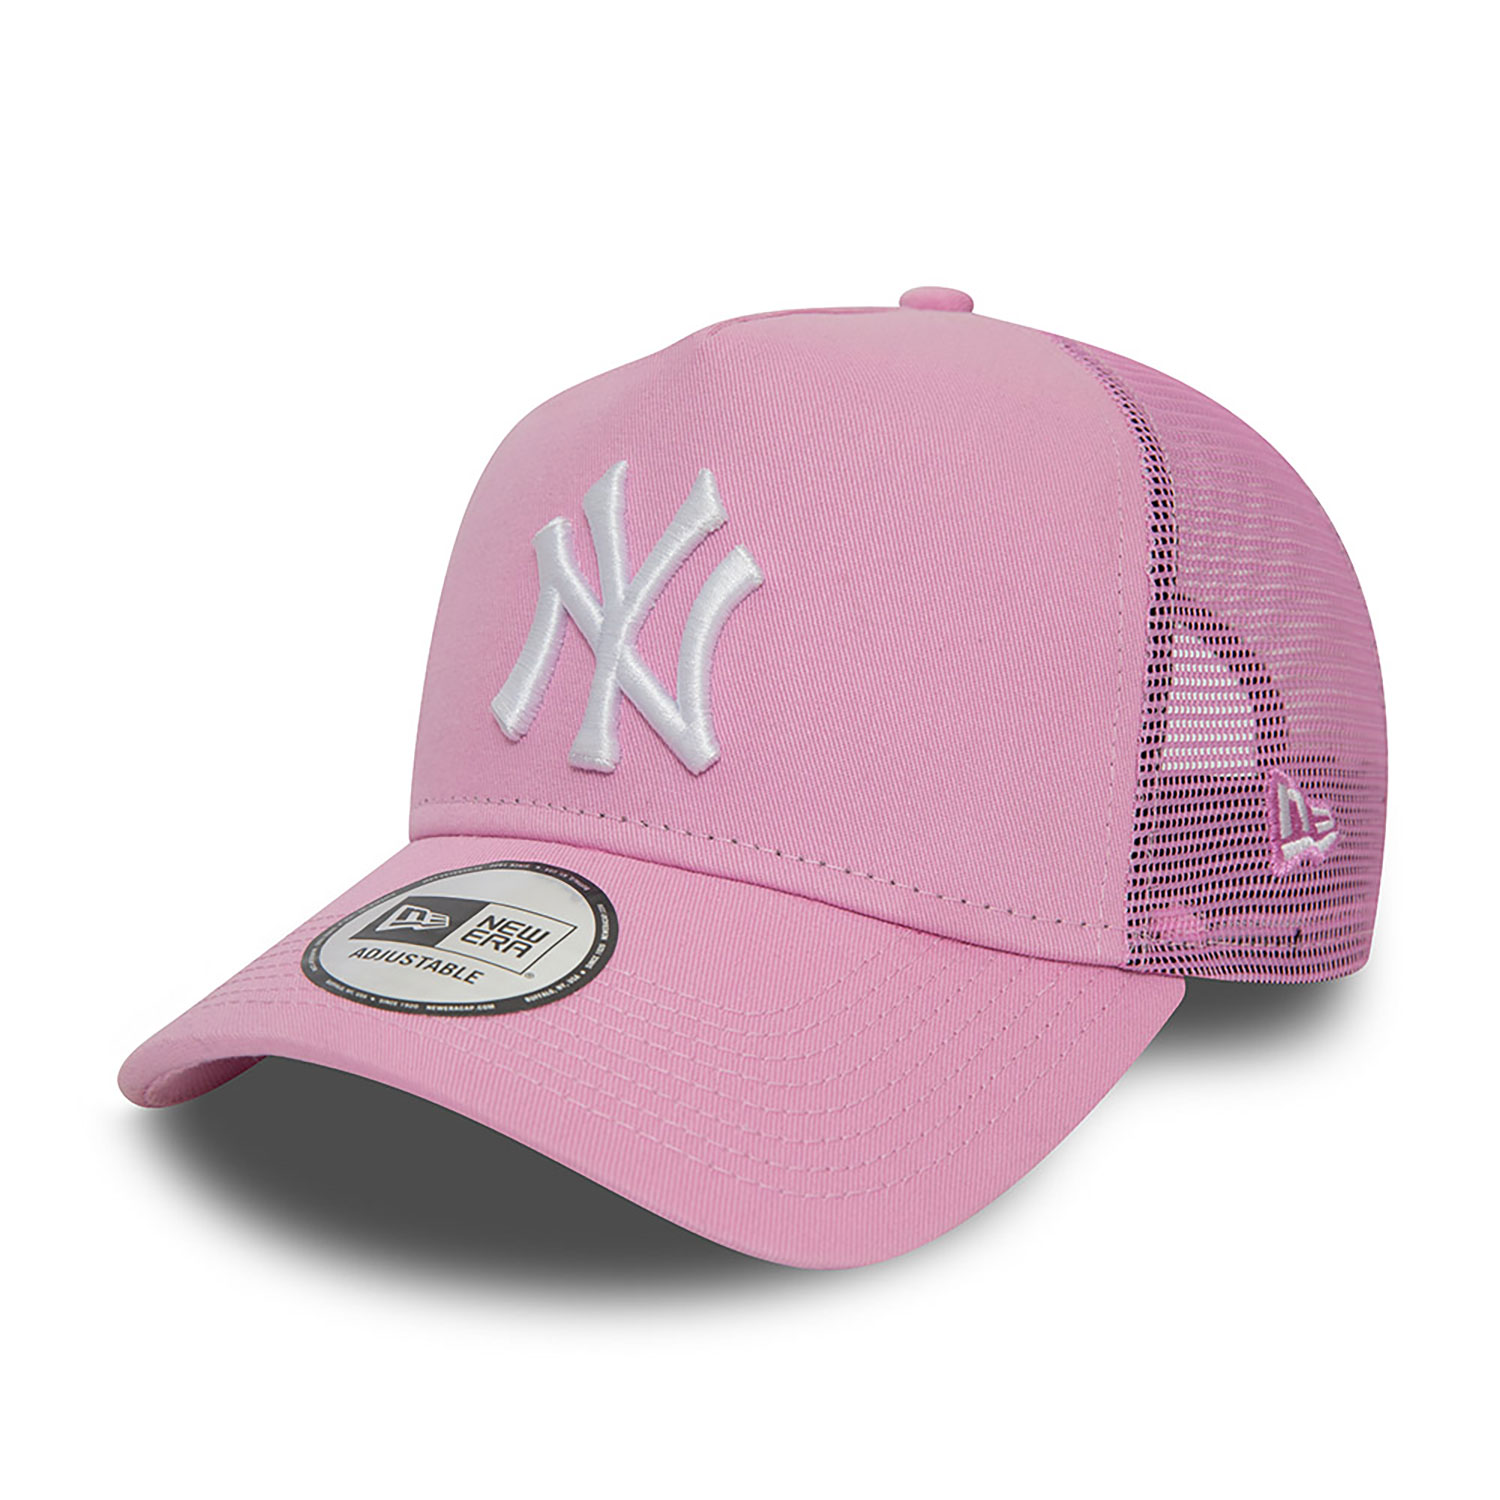 New York Yankees League Essential Pink Trucker Cap